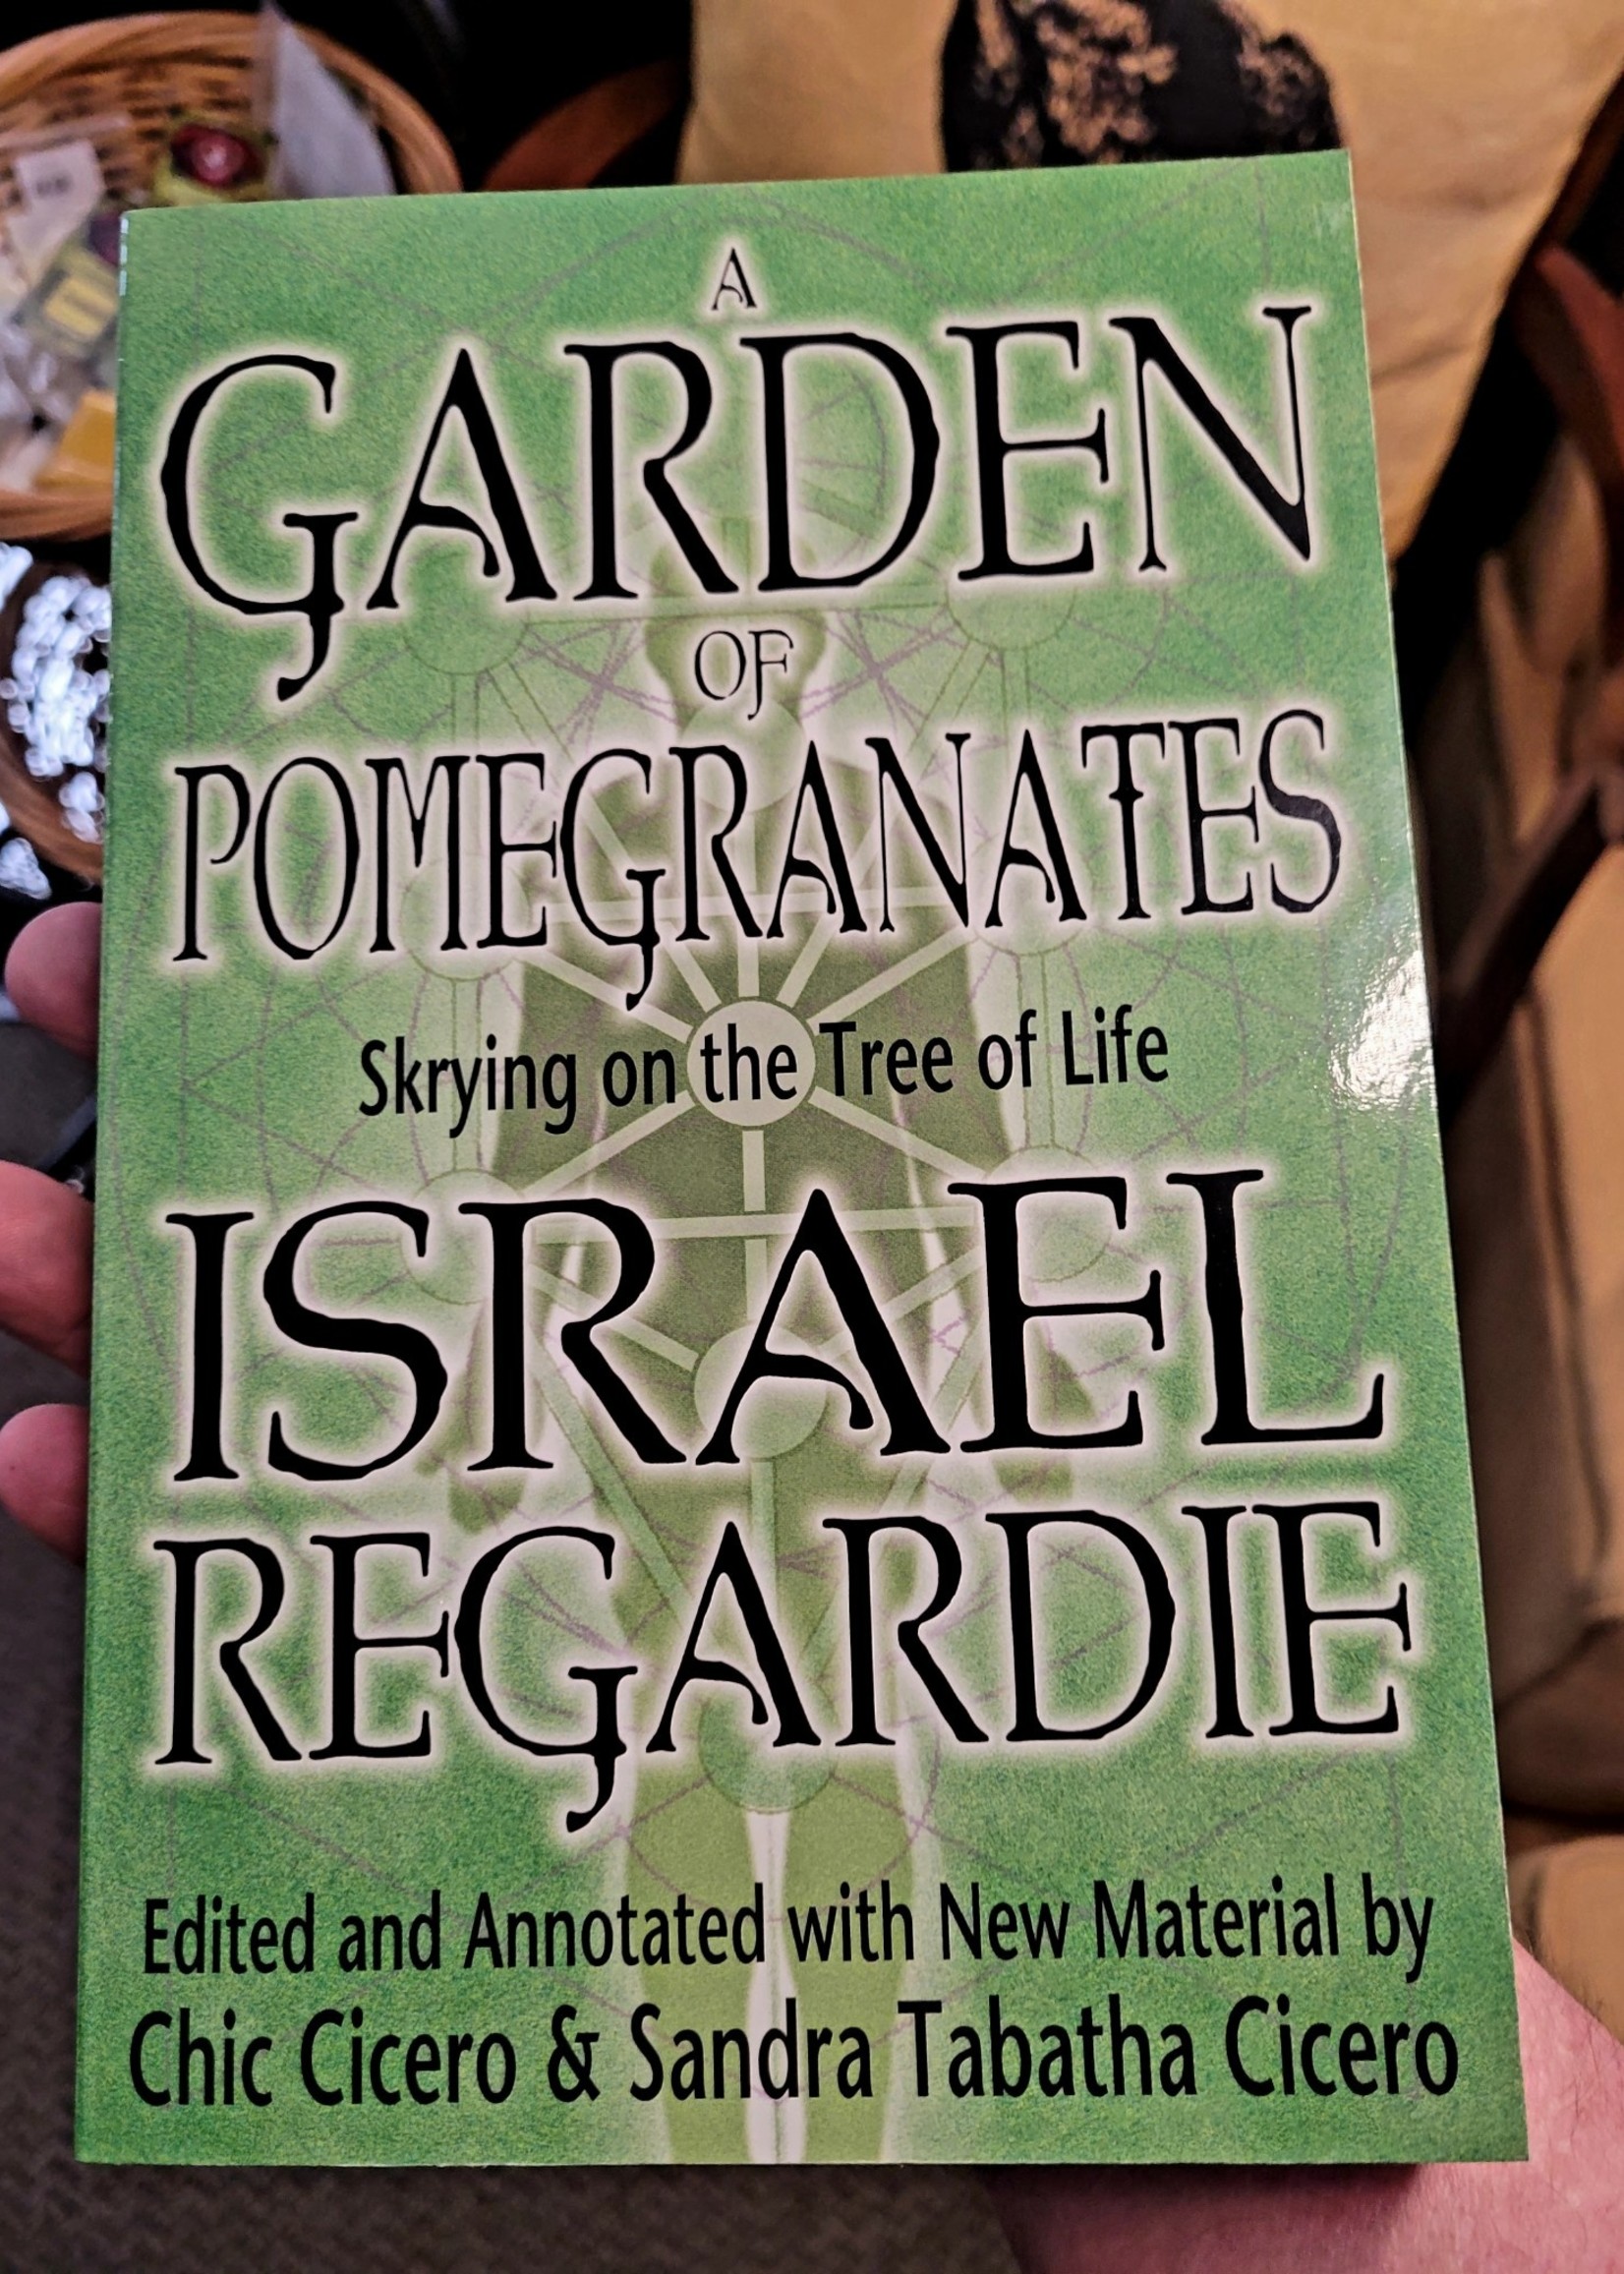 A Garden of Pomegranates - Israel Regardie